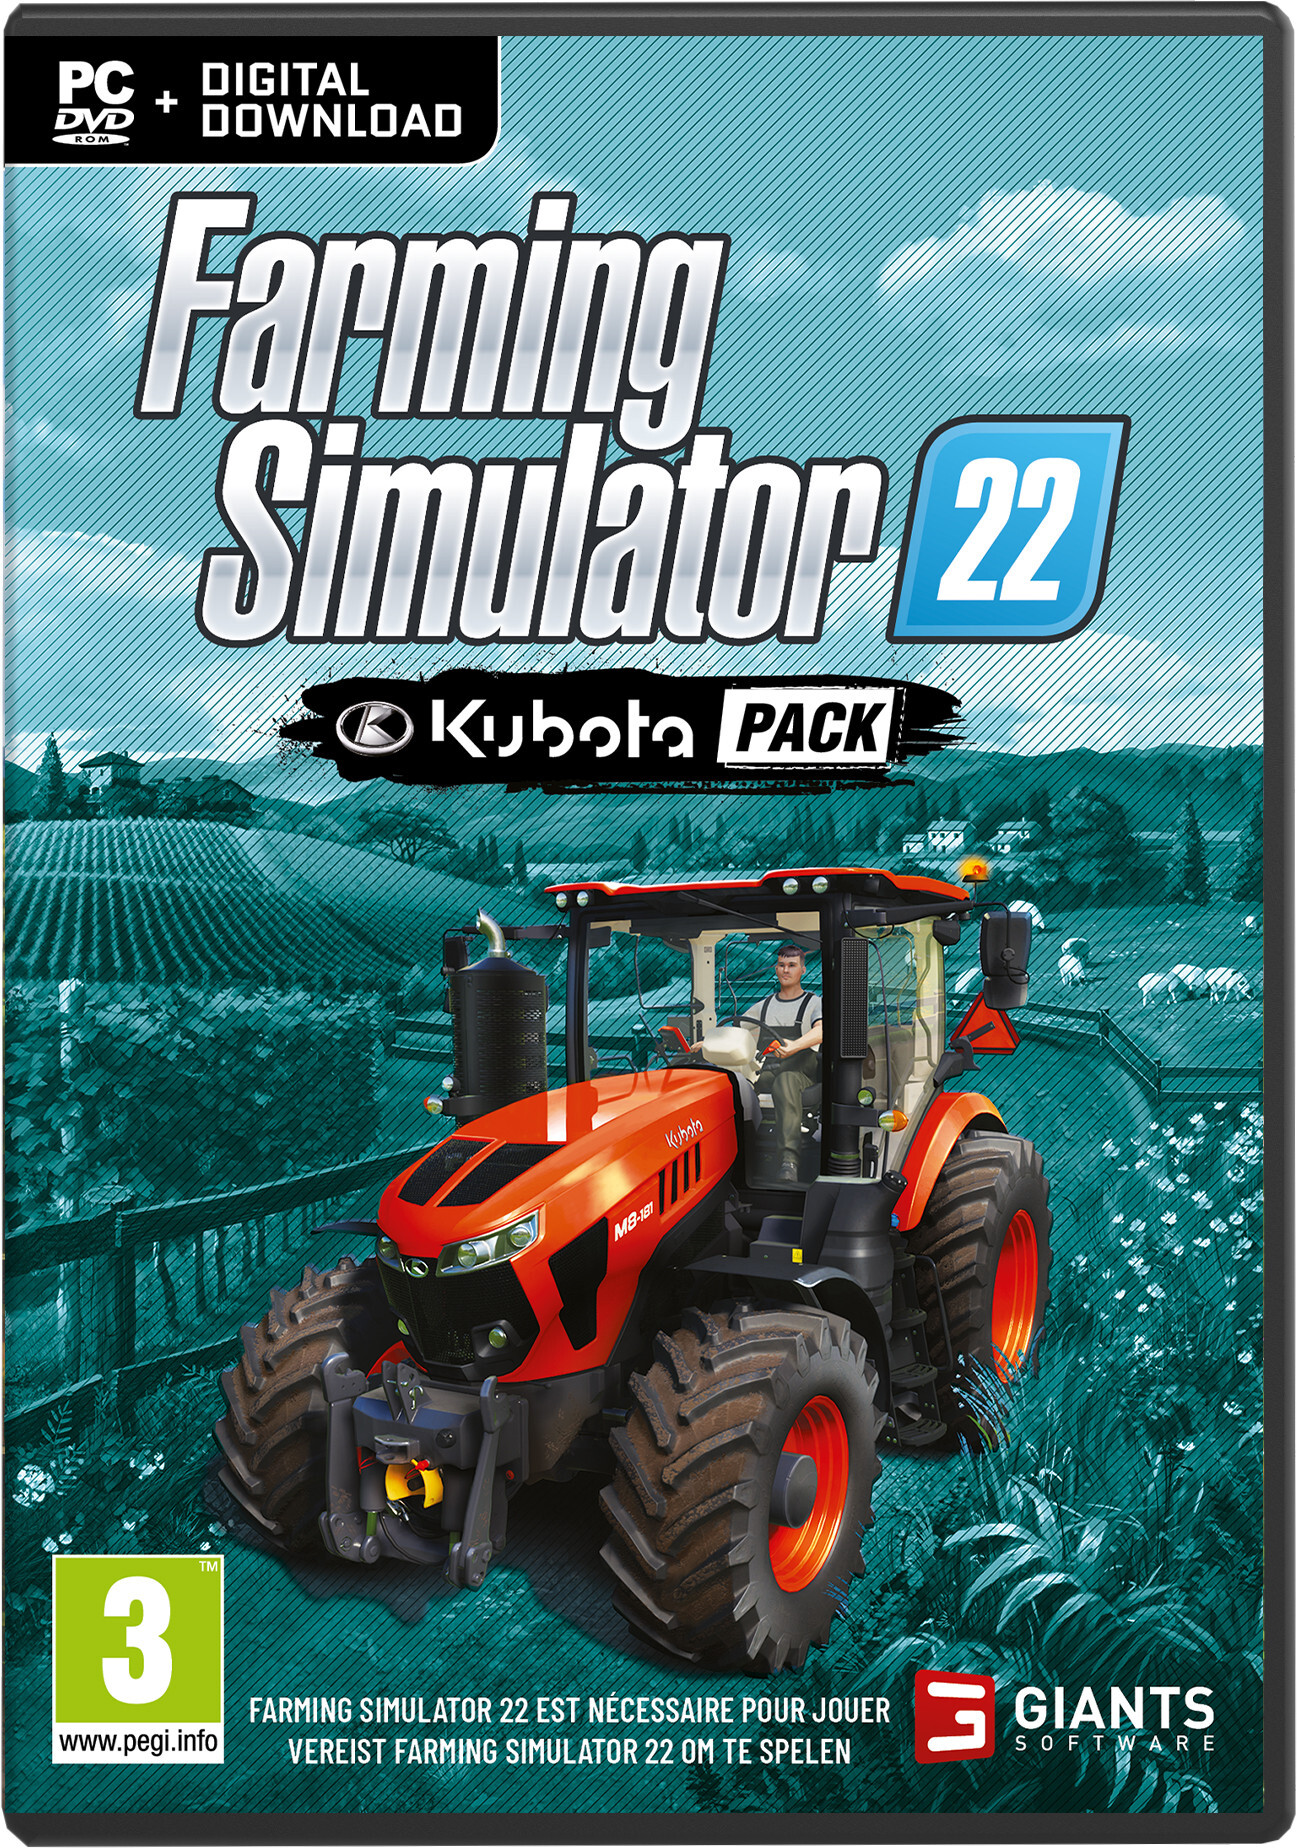 Giants Software GmbH Farming Simulator 22 Kubota Expansion Pack PC